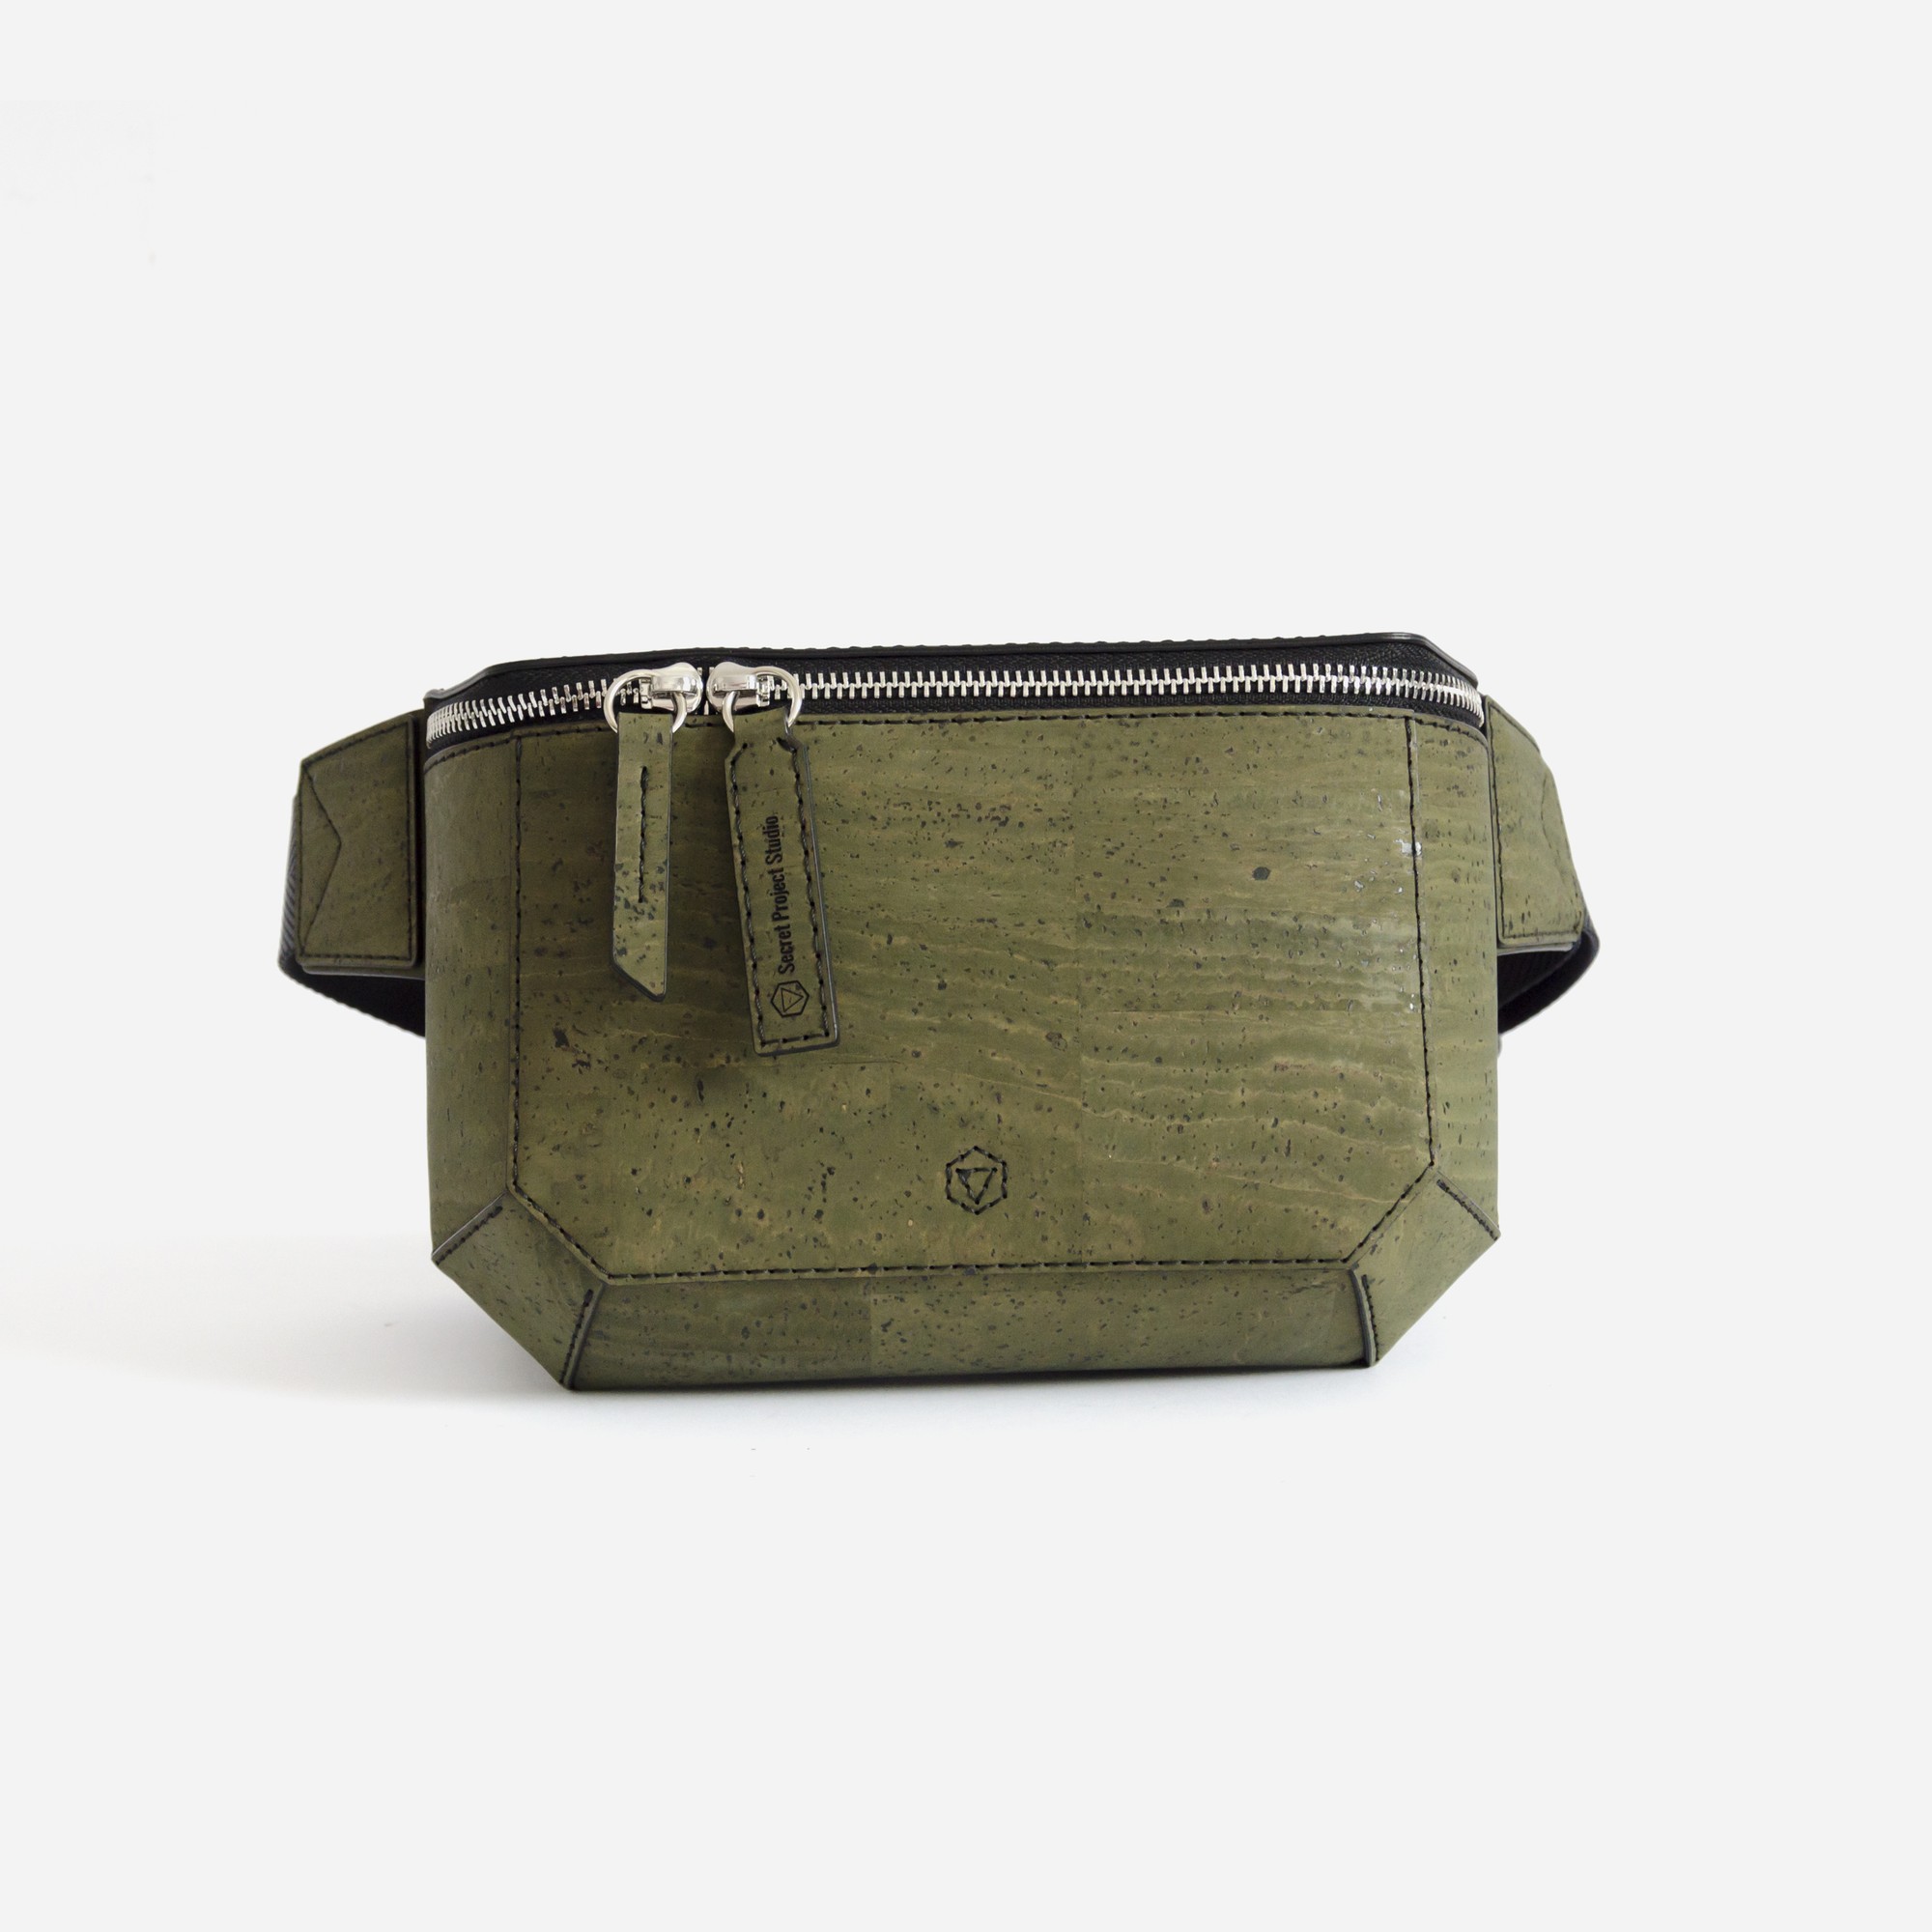 Natural cork chest bag Veikata in army green color